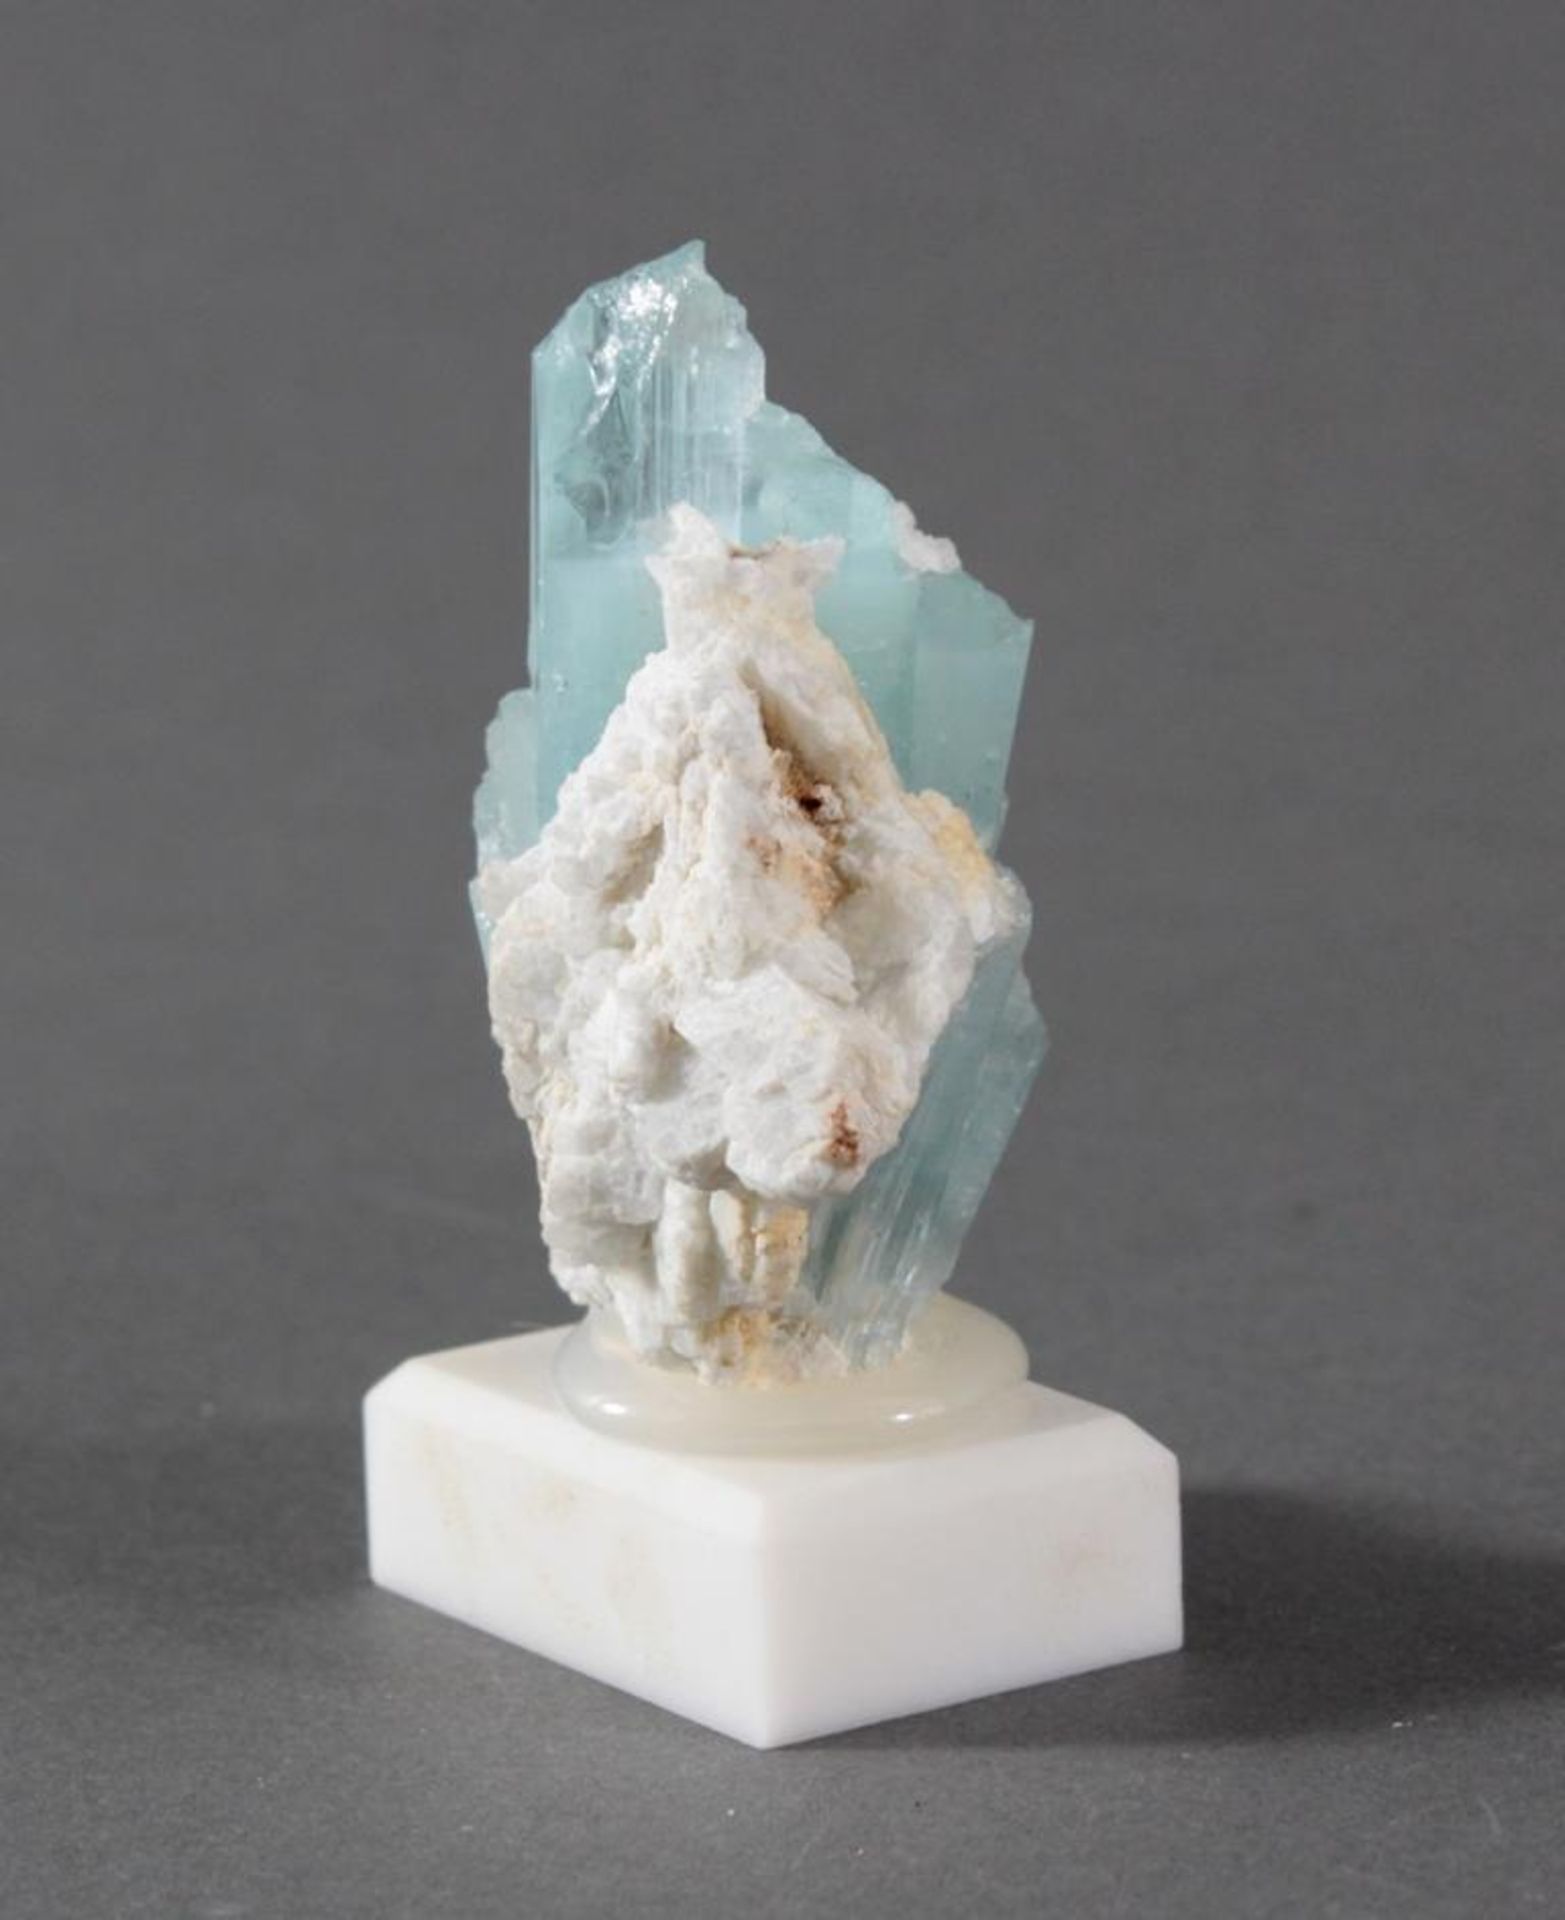 Aquamarin beendeter Crystal, Transparent Sky Blue aus Pakistan68 g, ca. 340 ct. Höhe 6 cm ohne - Image 3 of 3